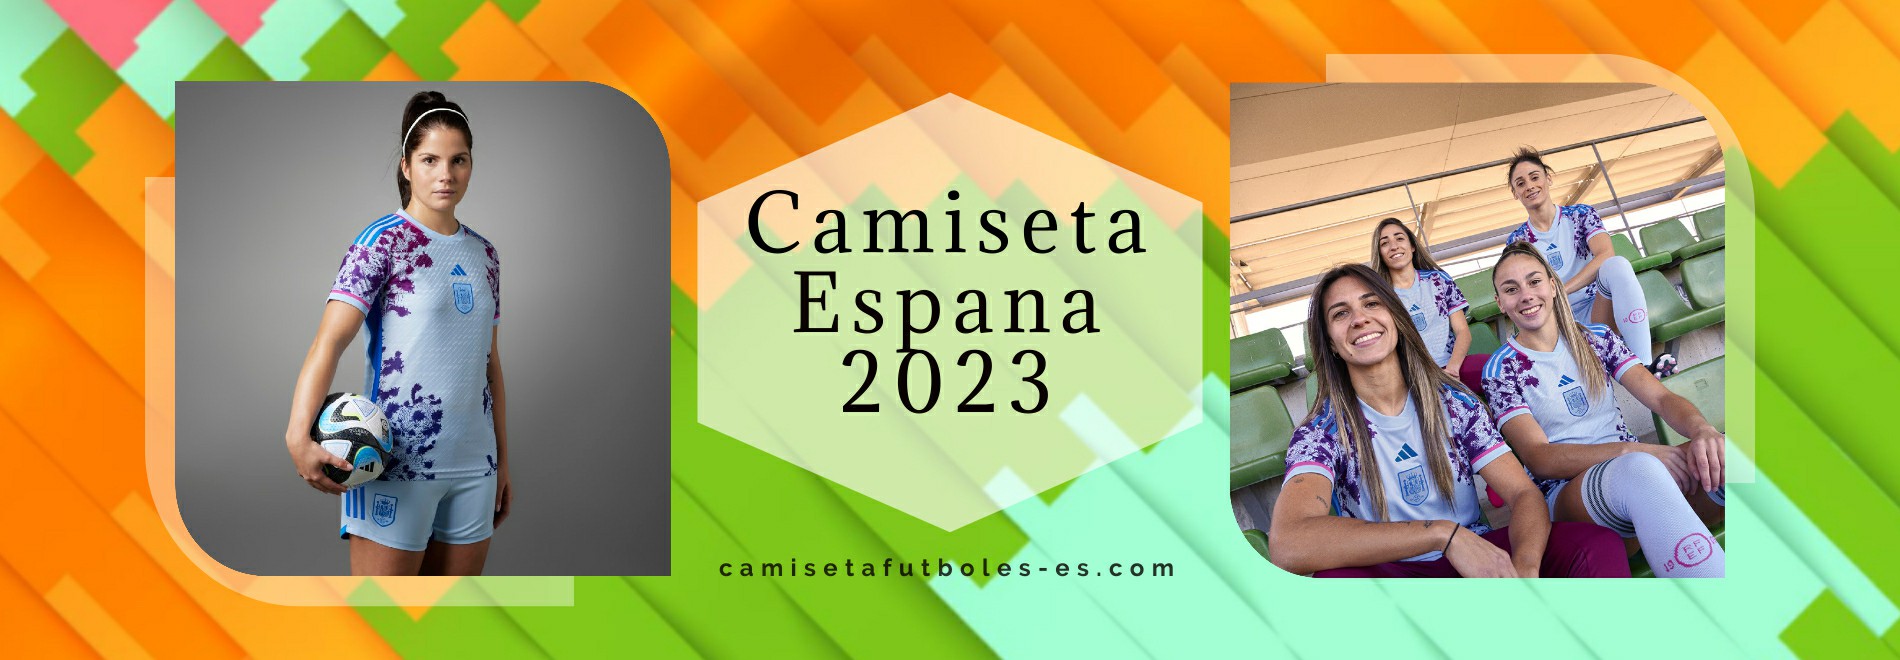 Camiseta Espana 2023-2024